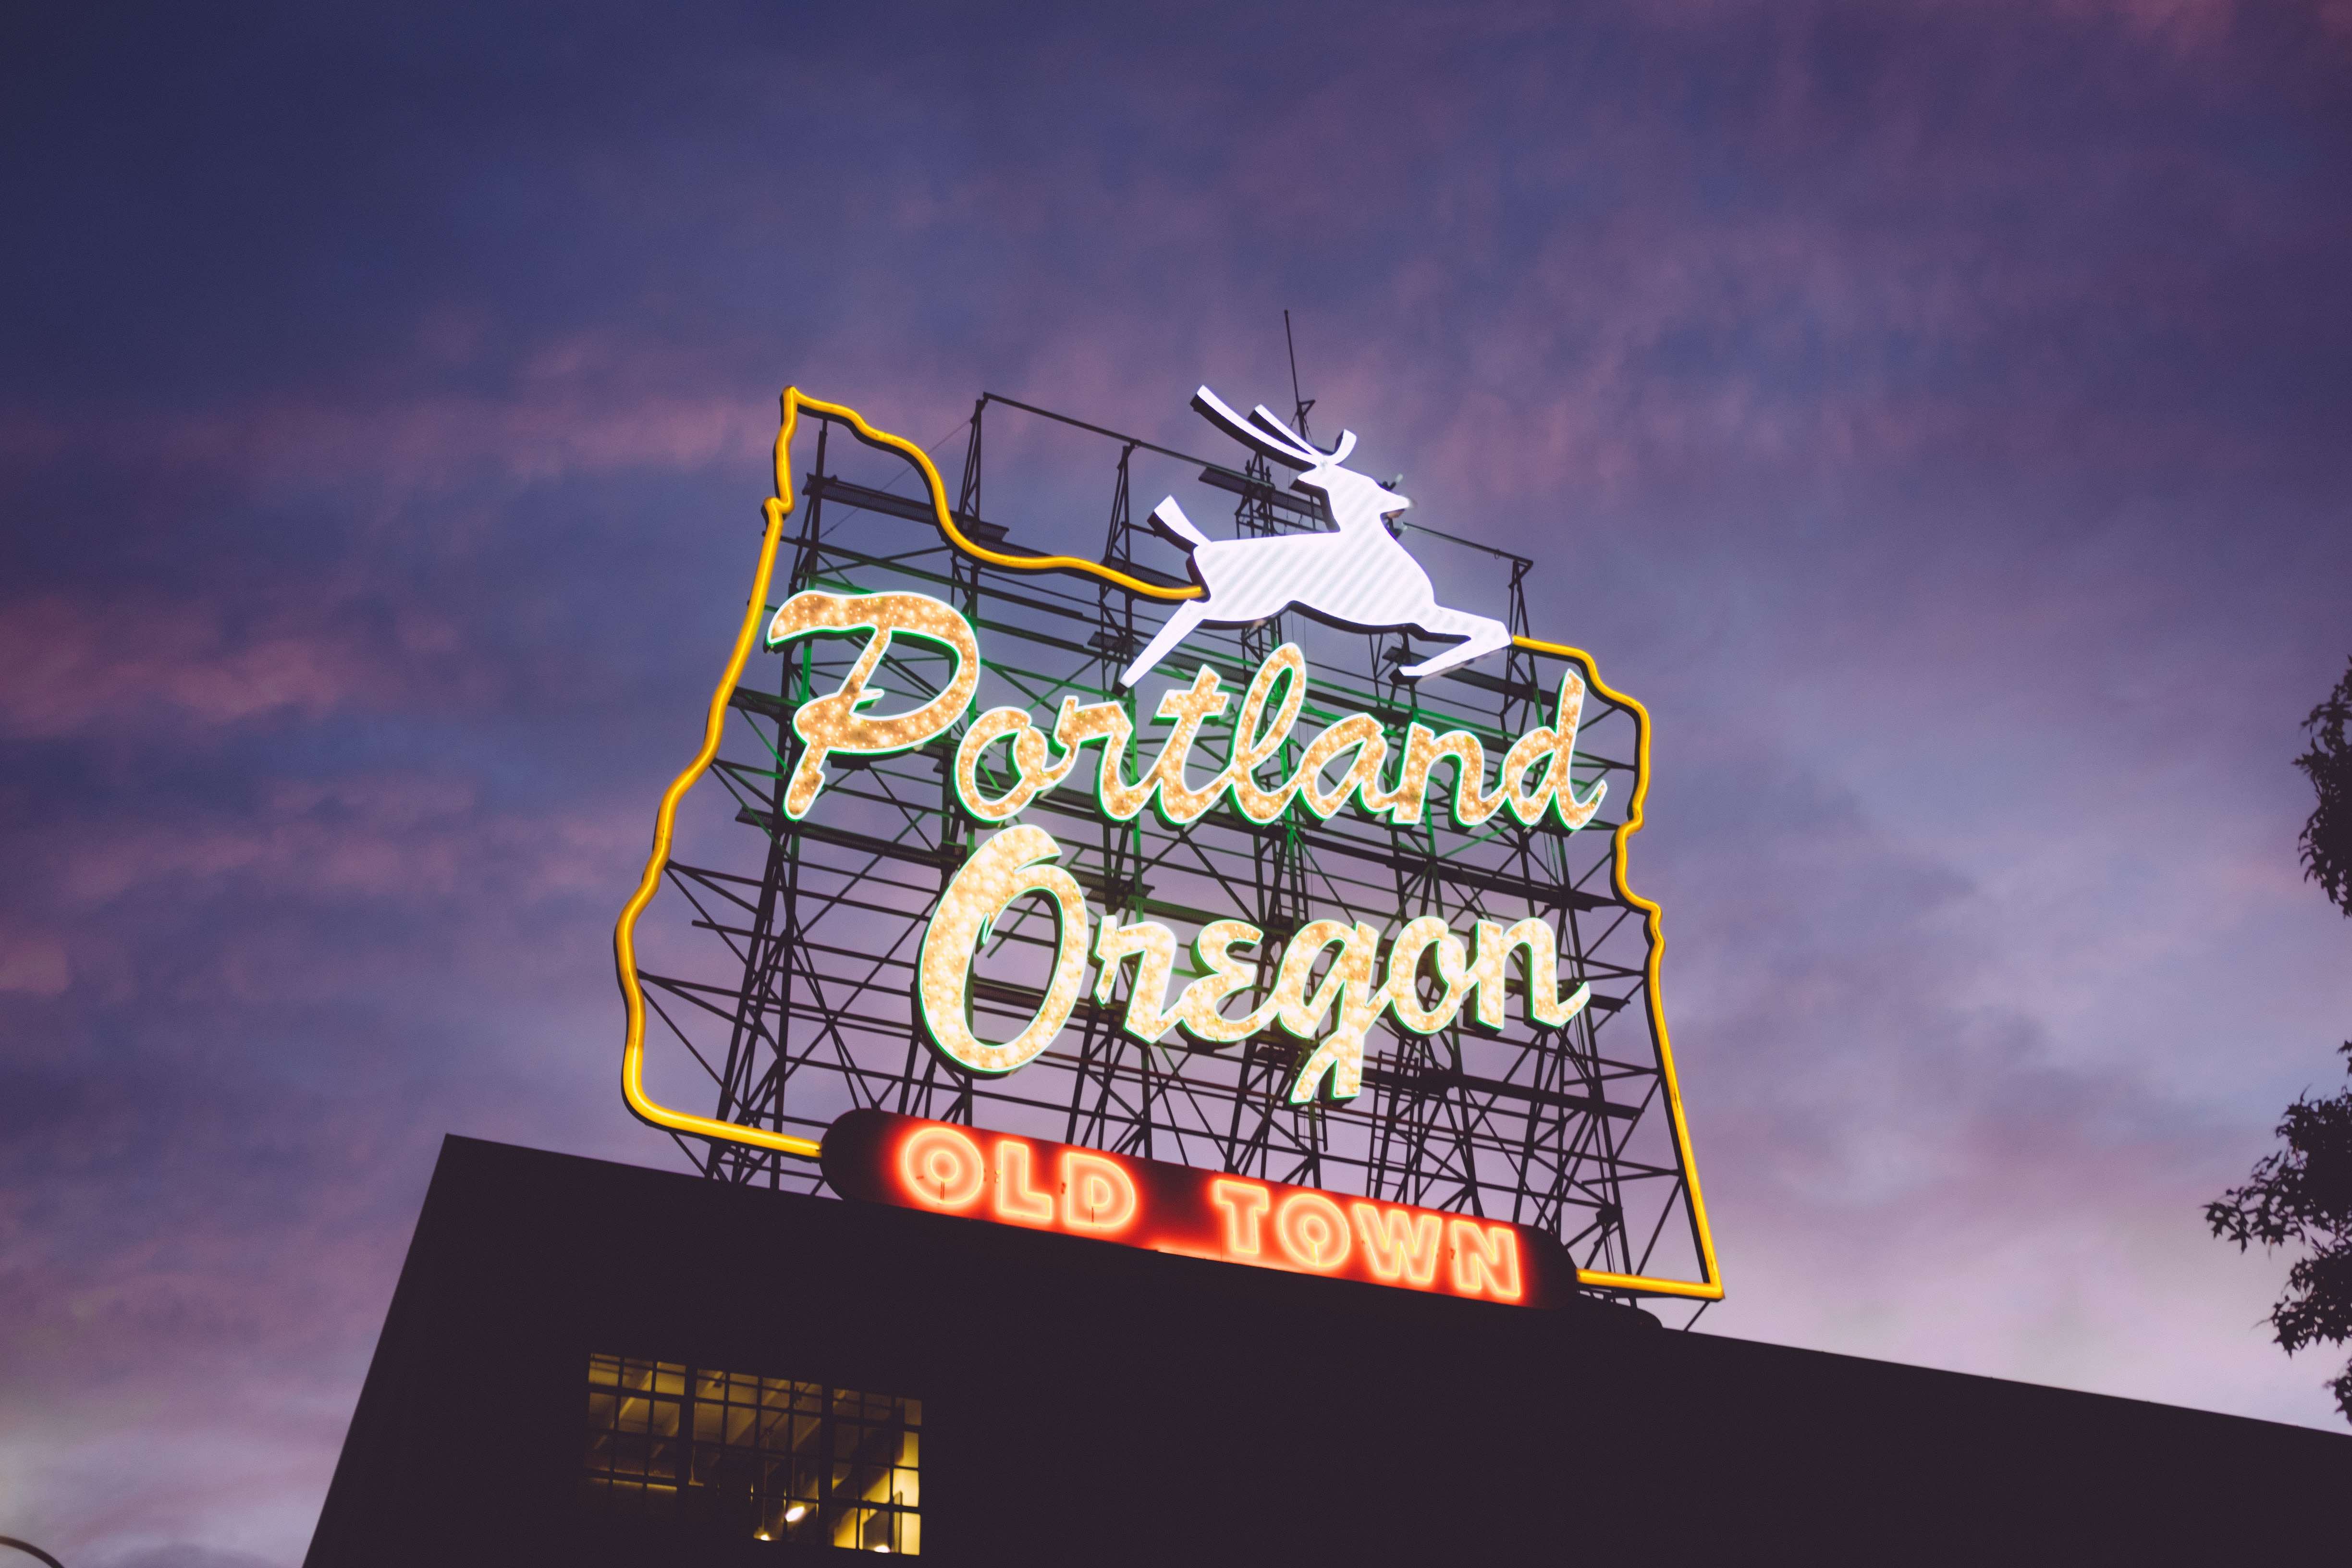 Next Stop: Portland, Oregon